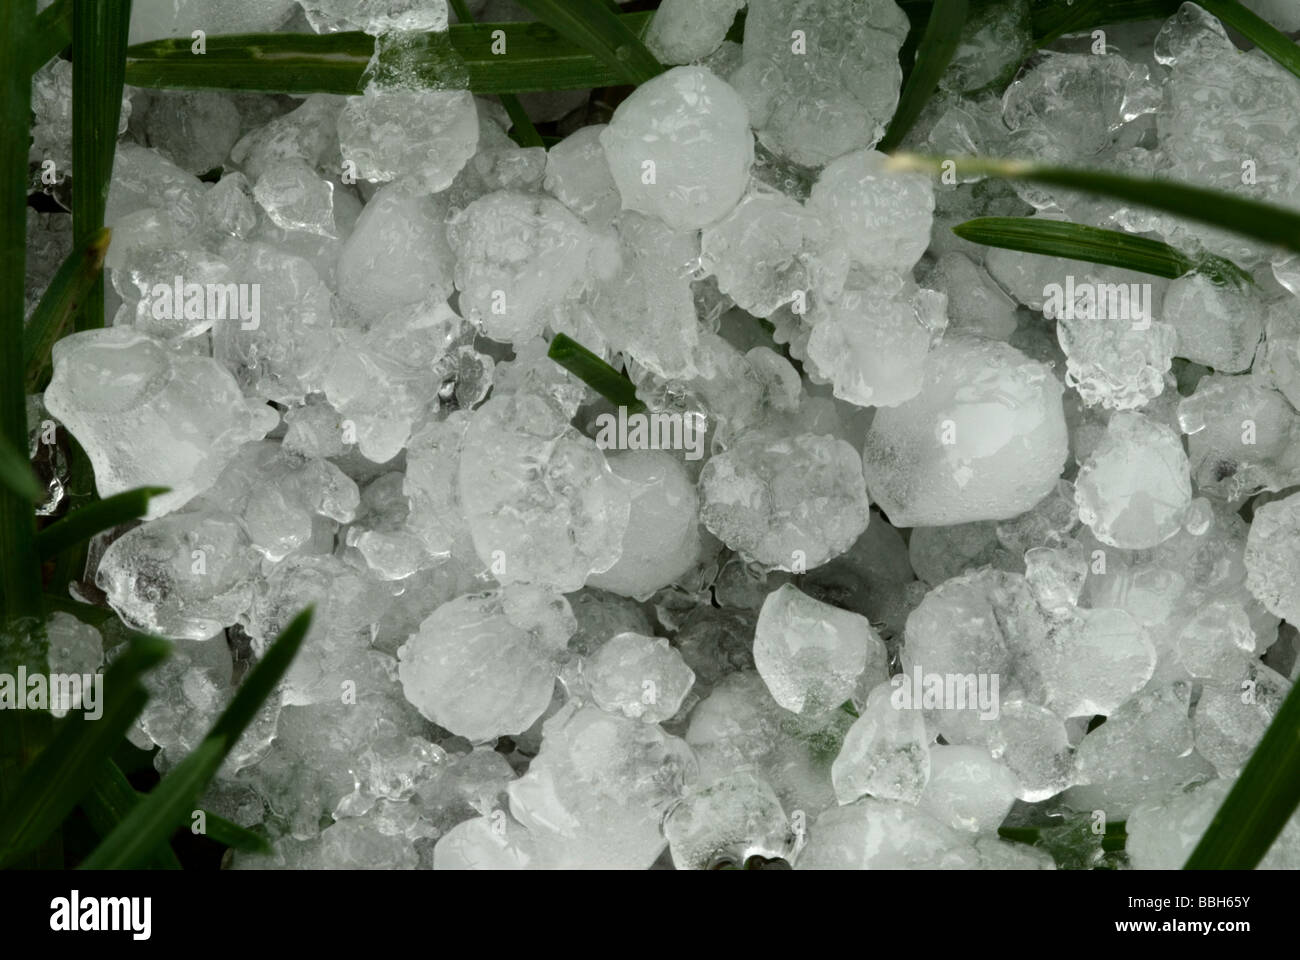 A close up image of hailstones from massive hailstorm, Aurora, Colorado US Stock Photo